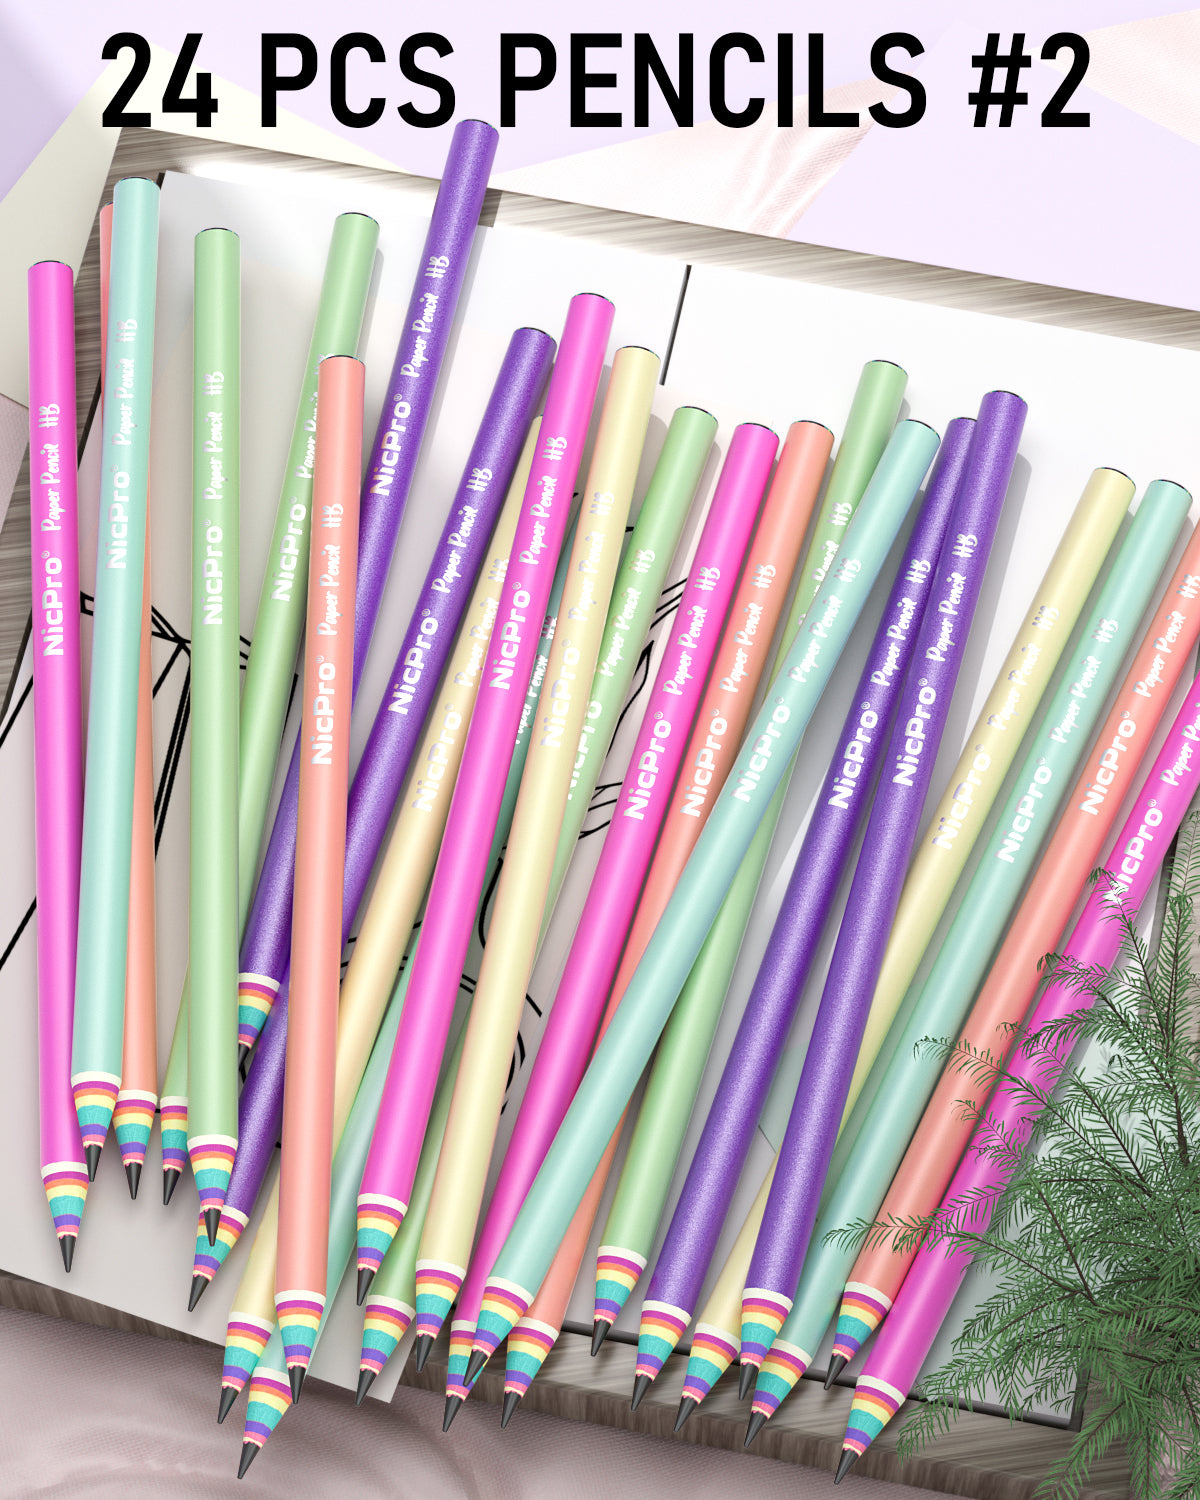 Nicpro 12PCS Rainbow Pencils HB #2, Cute Pastel Pencils Pre-Sharpened